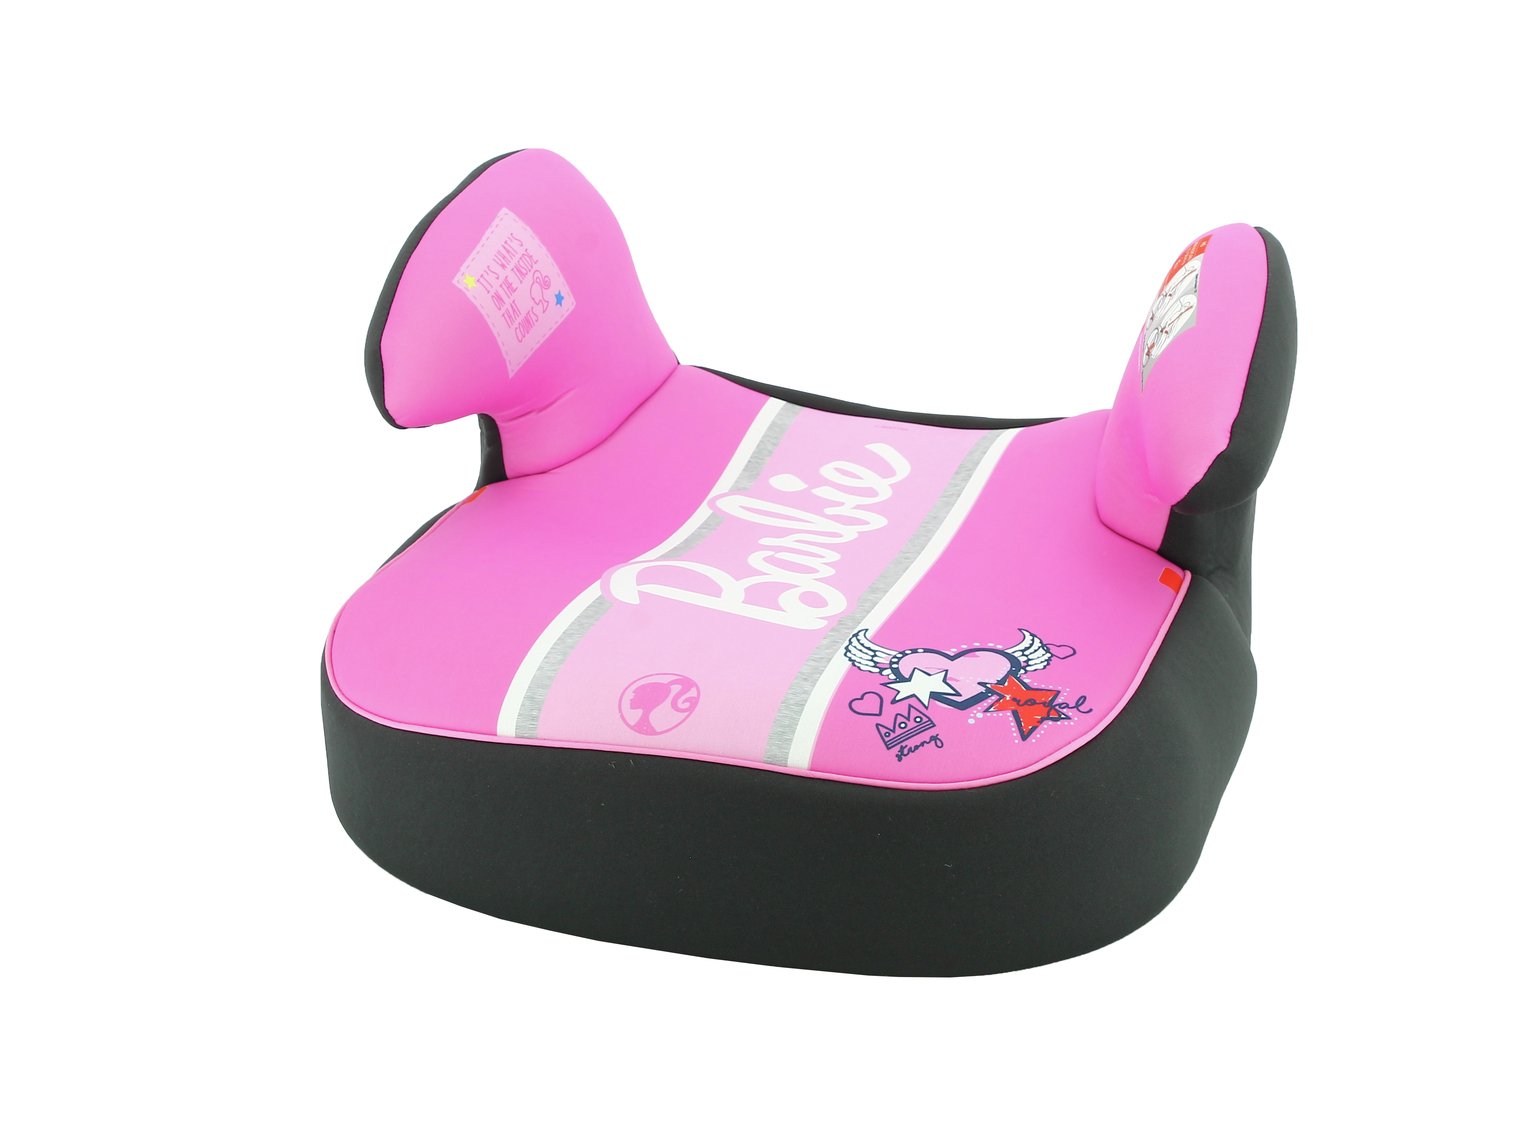 barbie booster seat